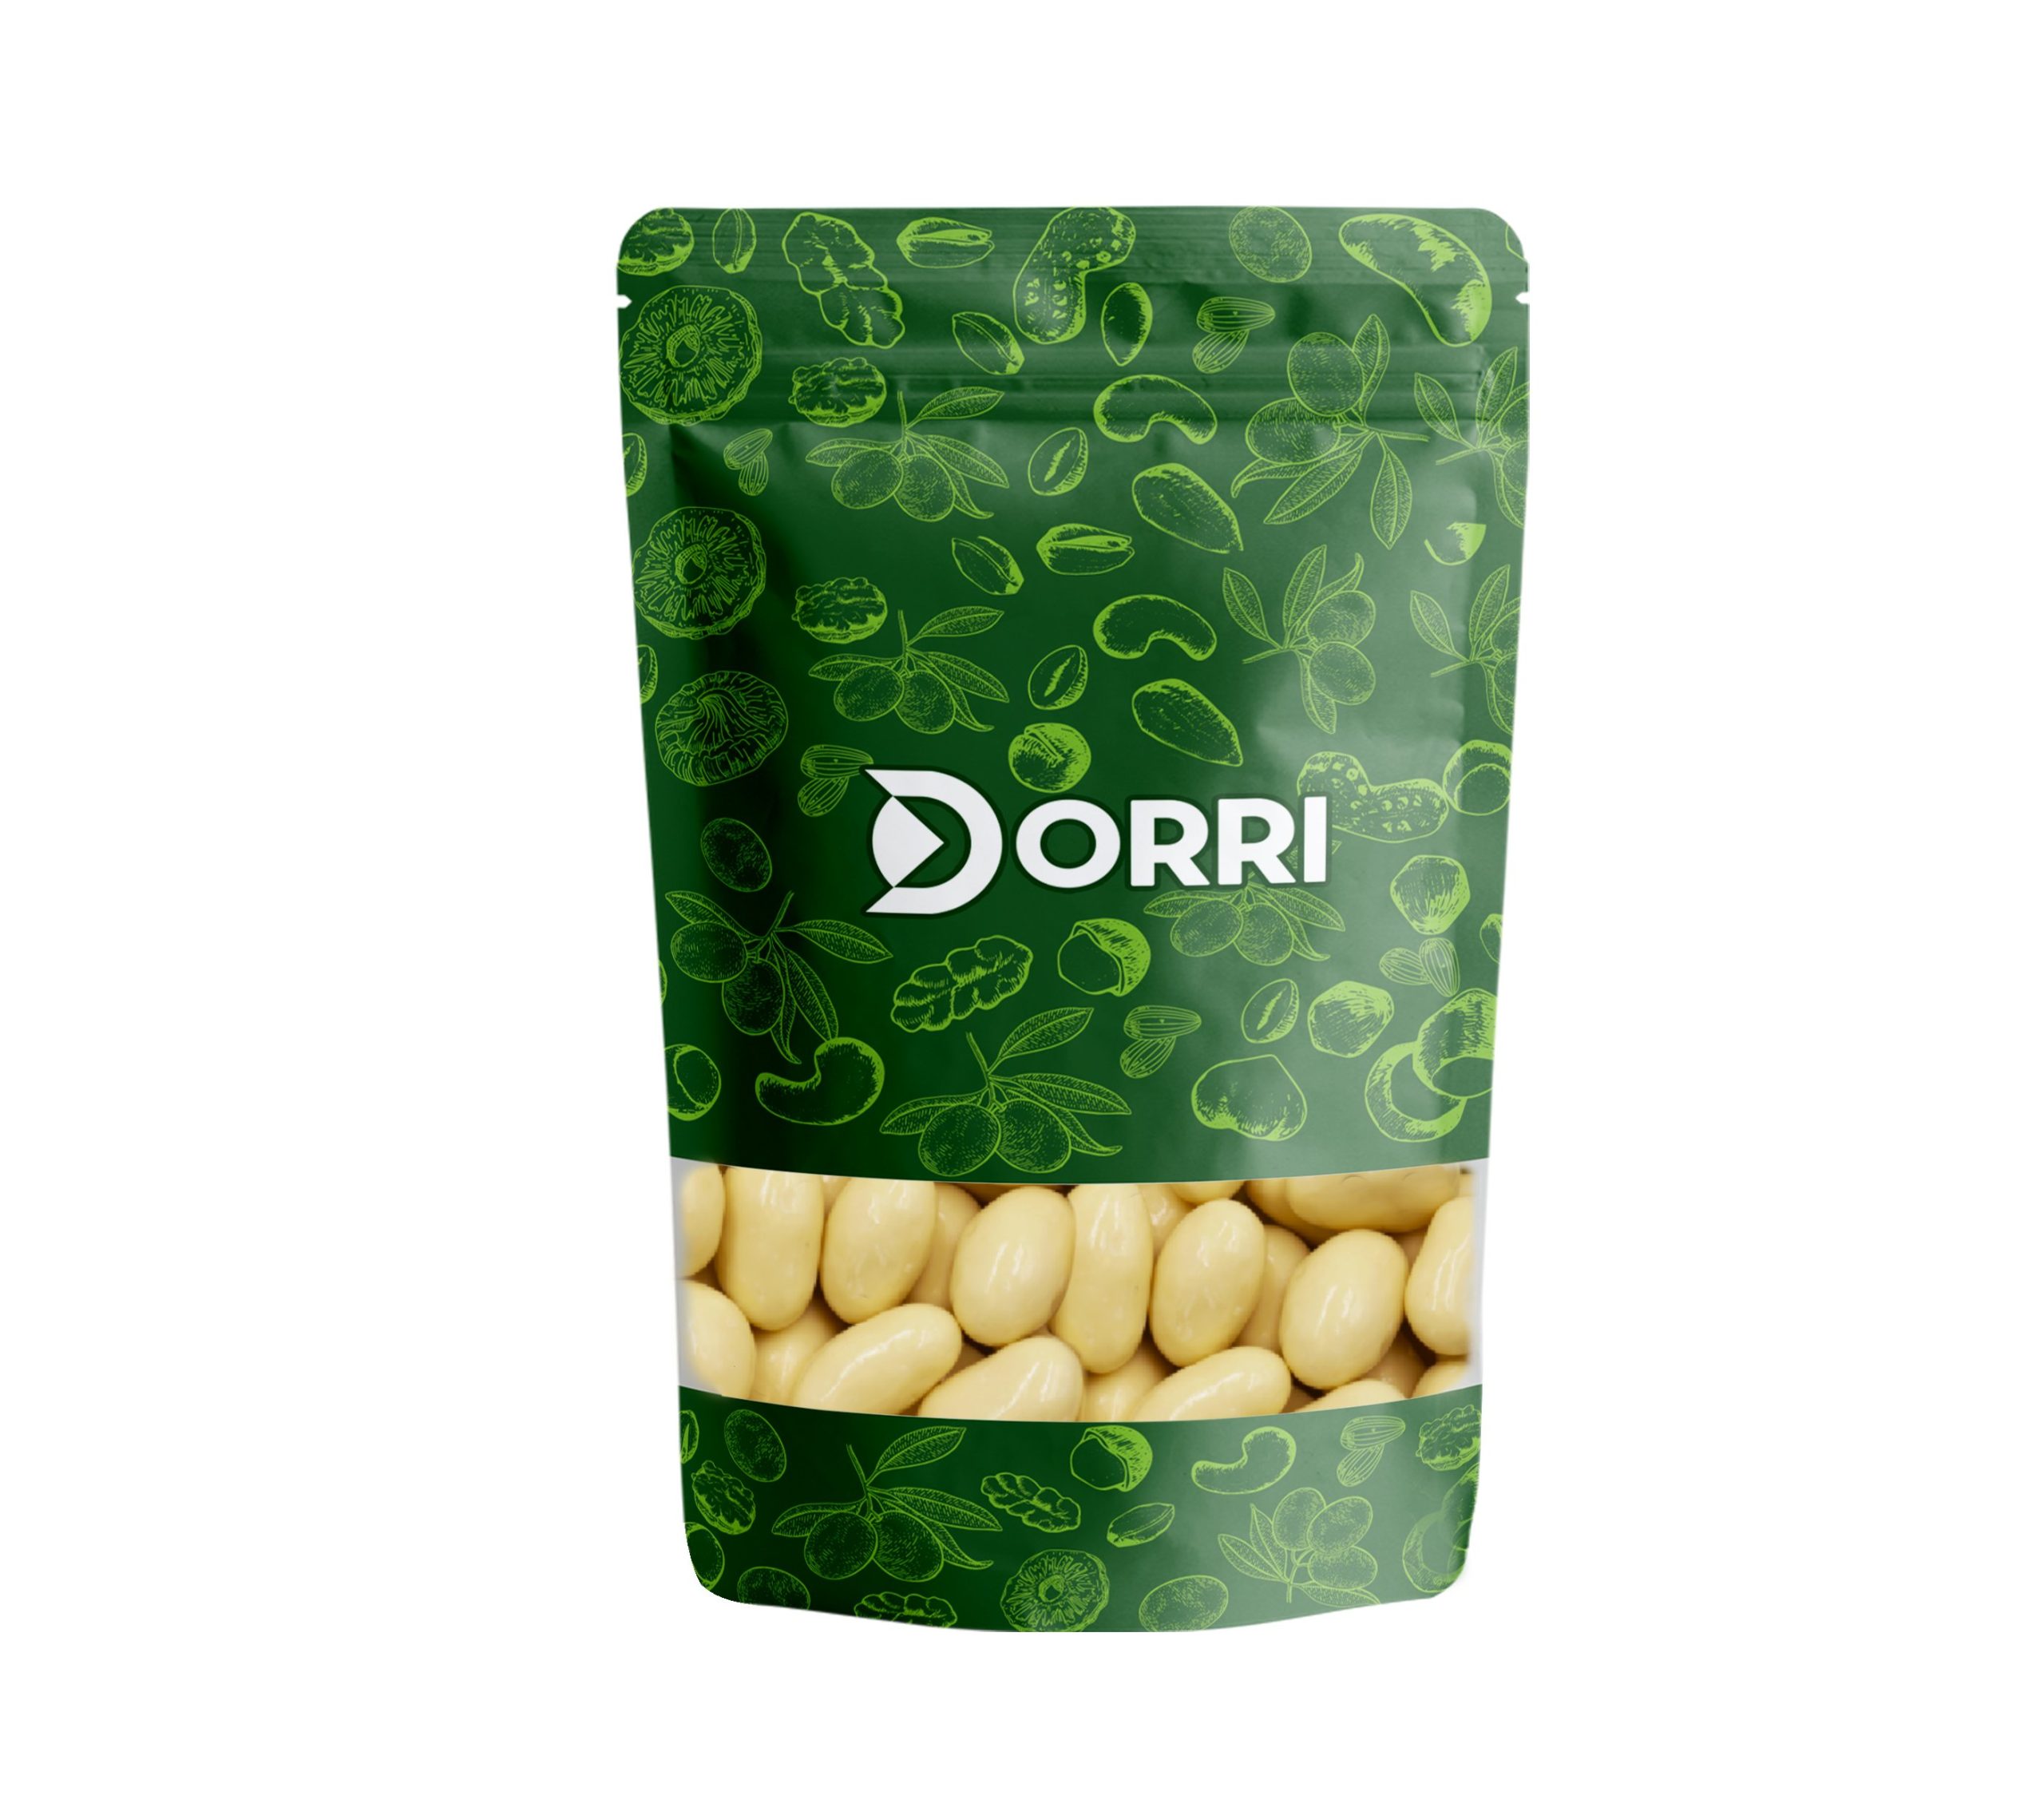 Dorri - Yogurt Covered Brazil Nuts